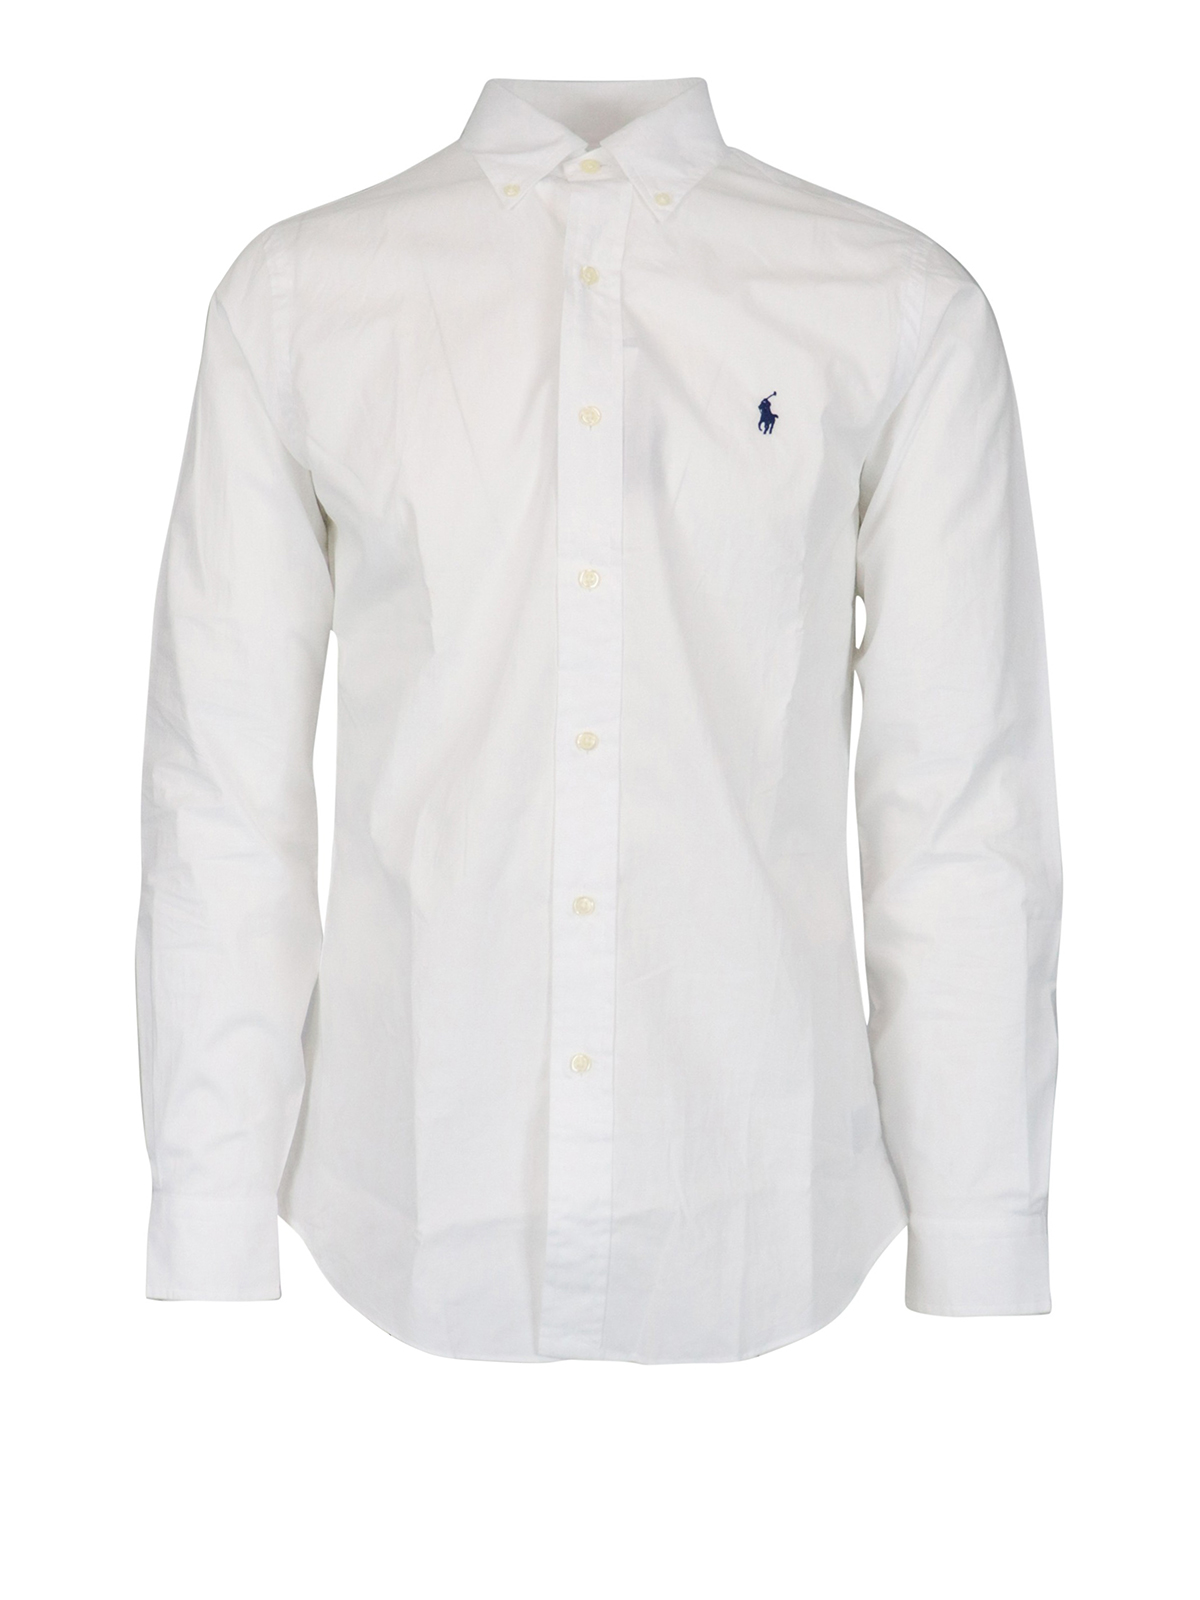 Shirts Polo Ralph Lauren - White cotton shirt - 710792044004 | iKRIX.com